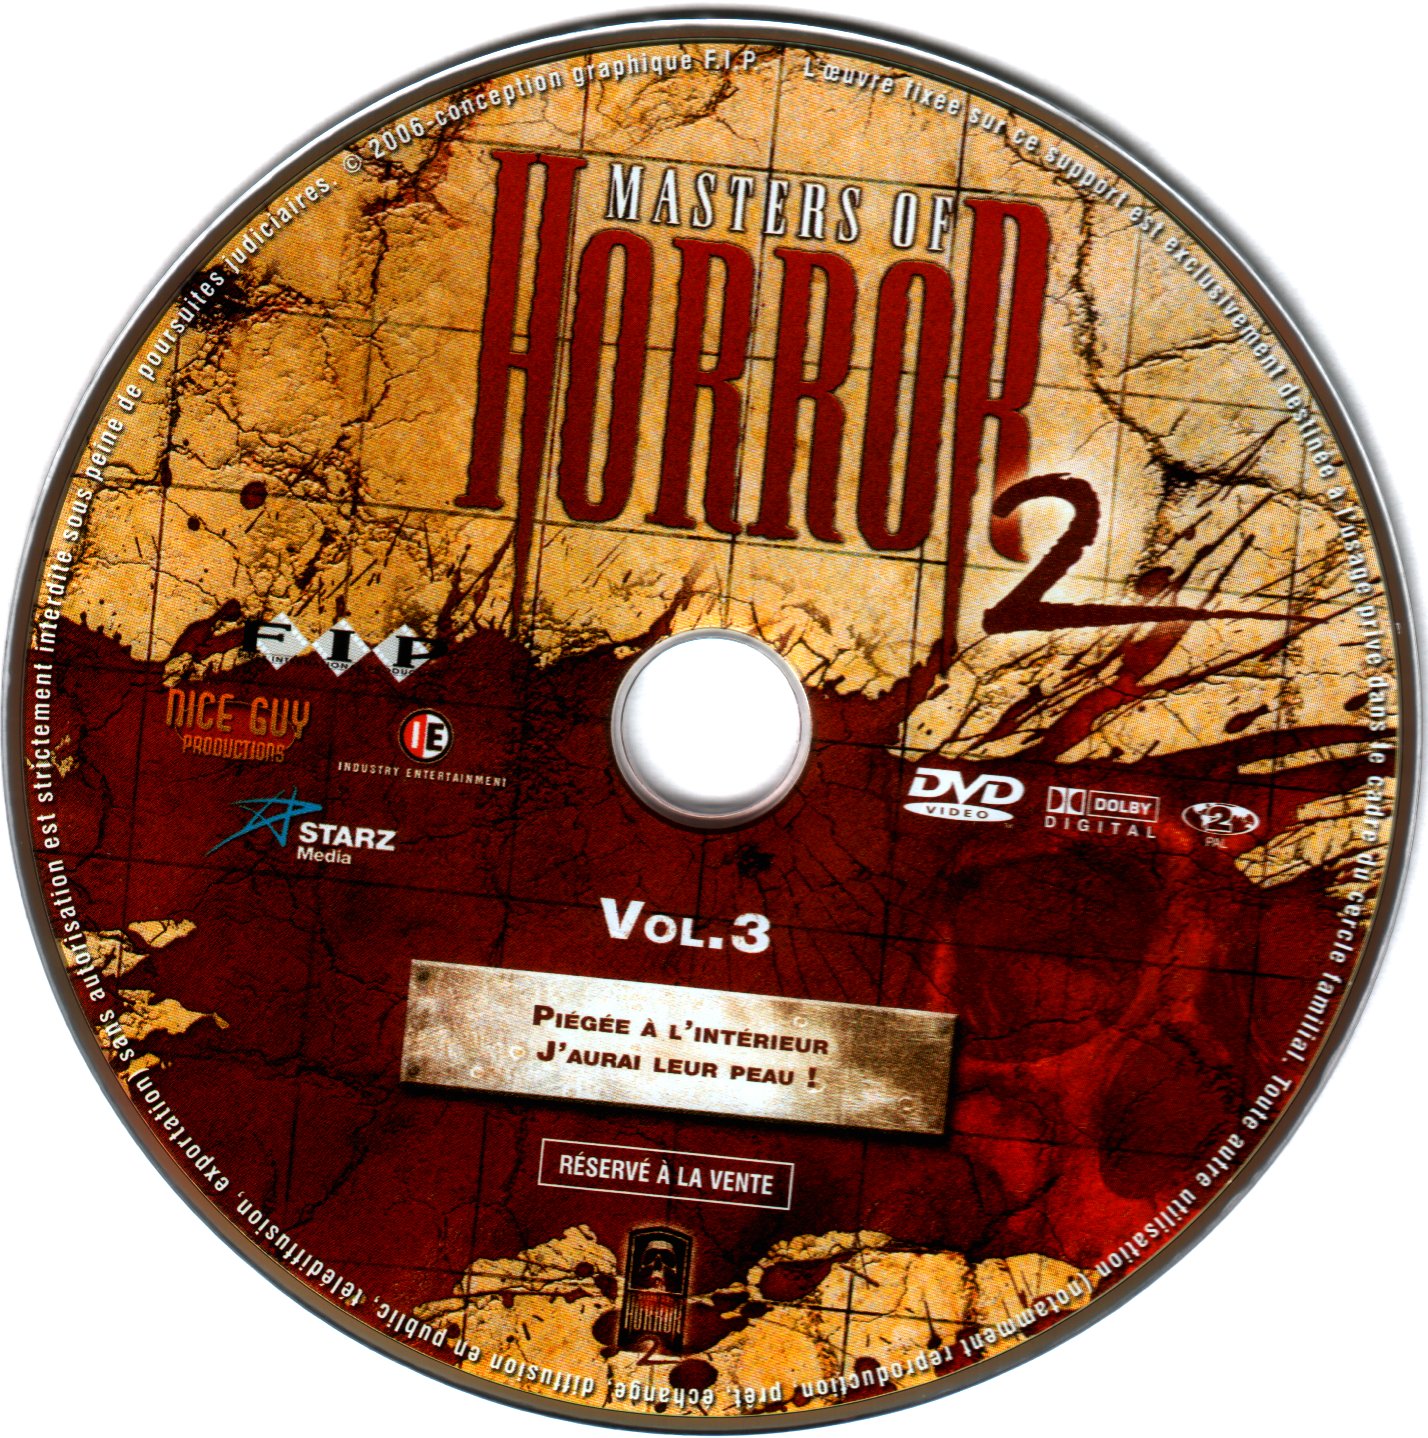 Masters of horror Saison 2 vol 3